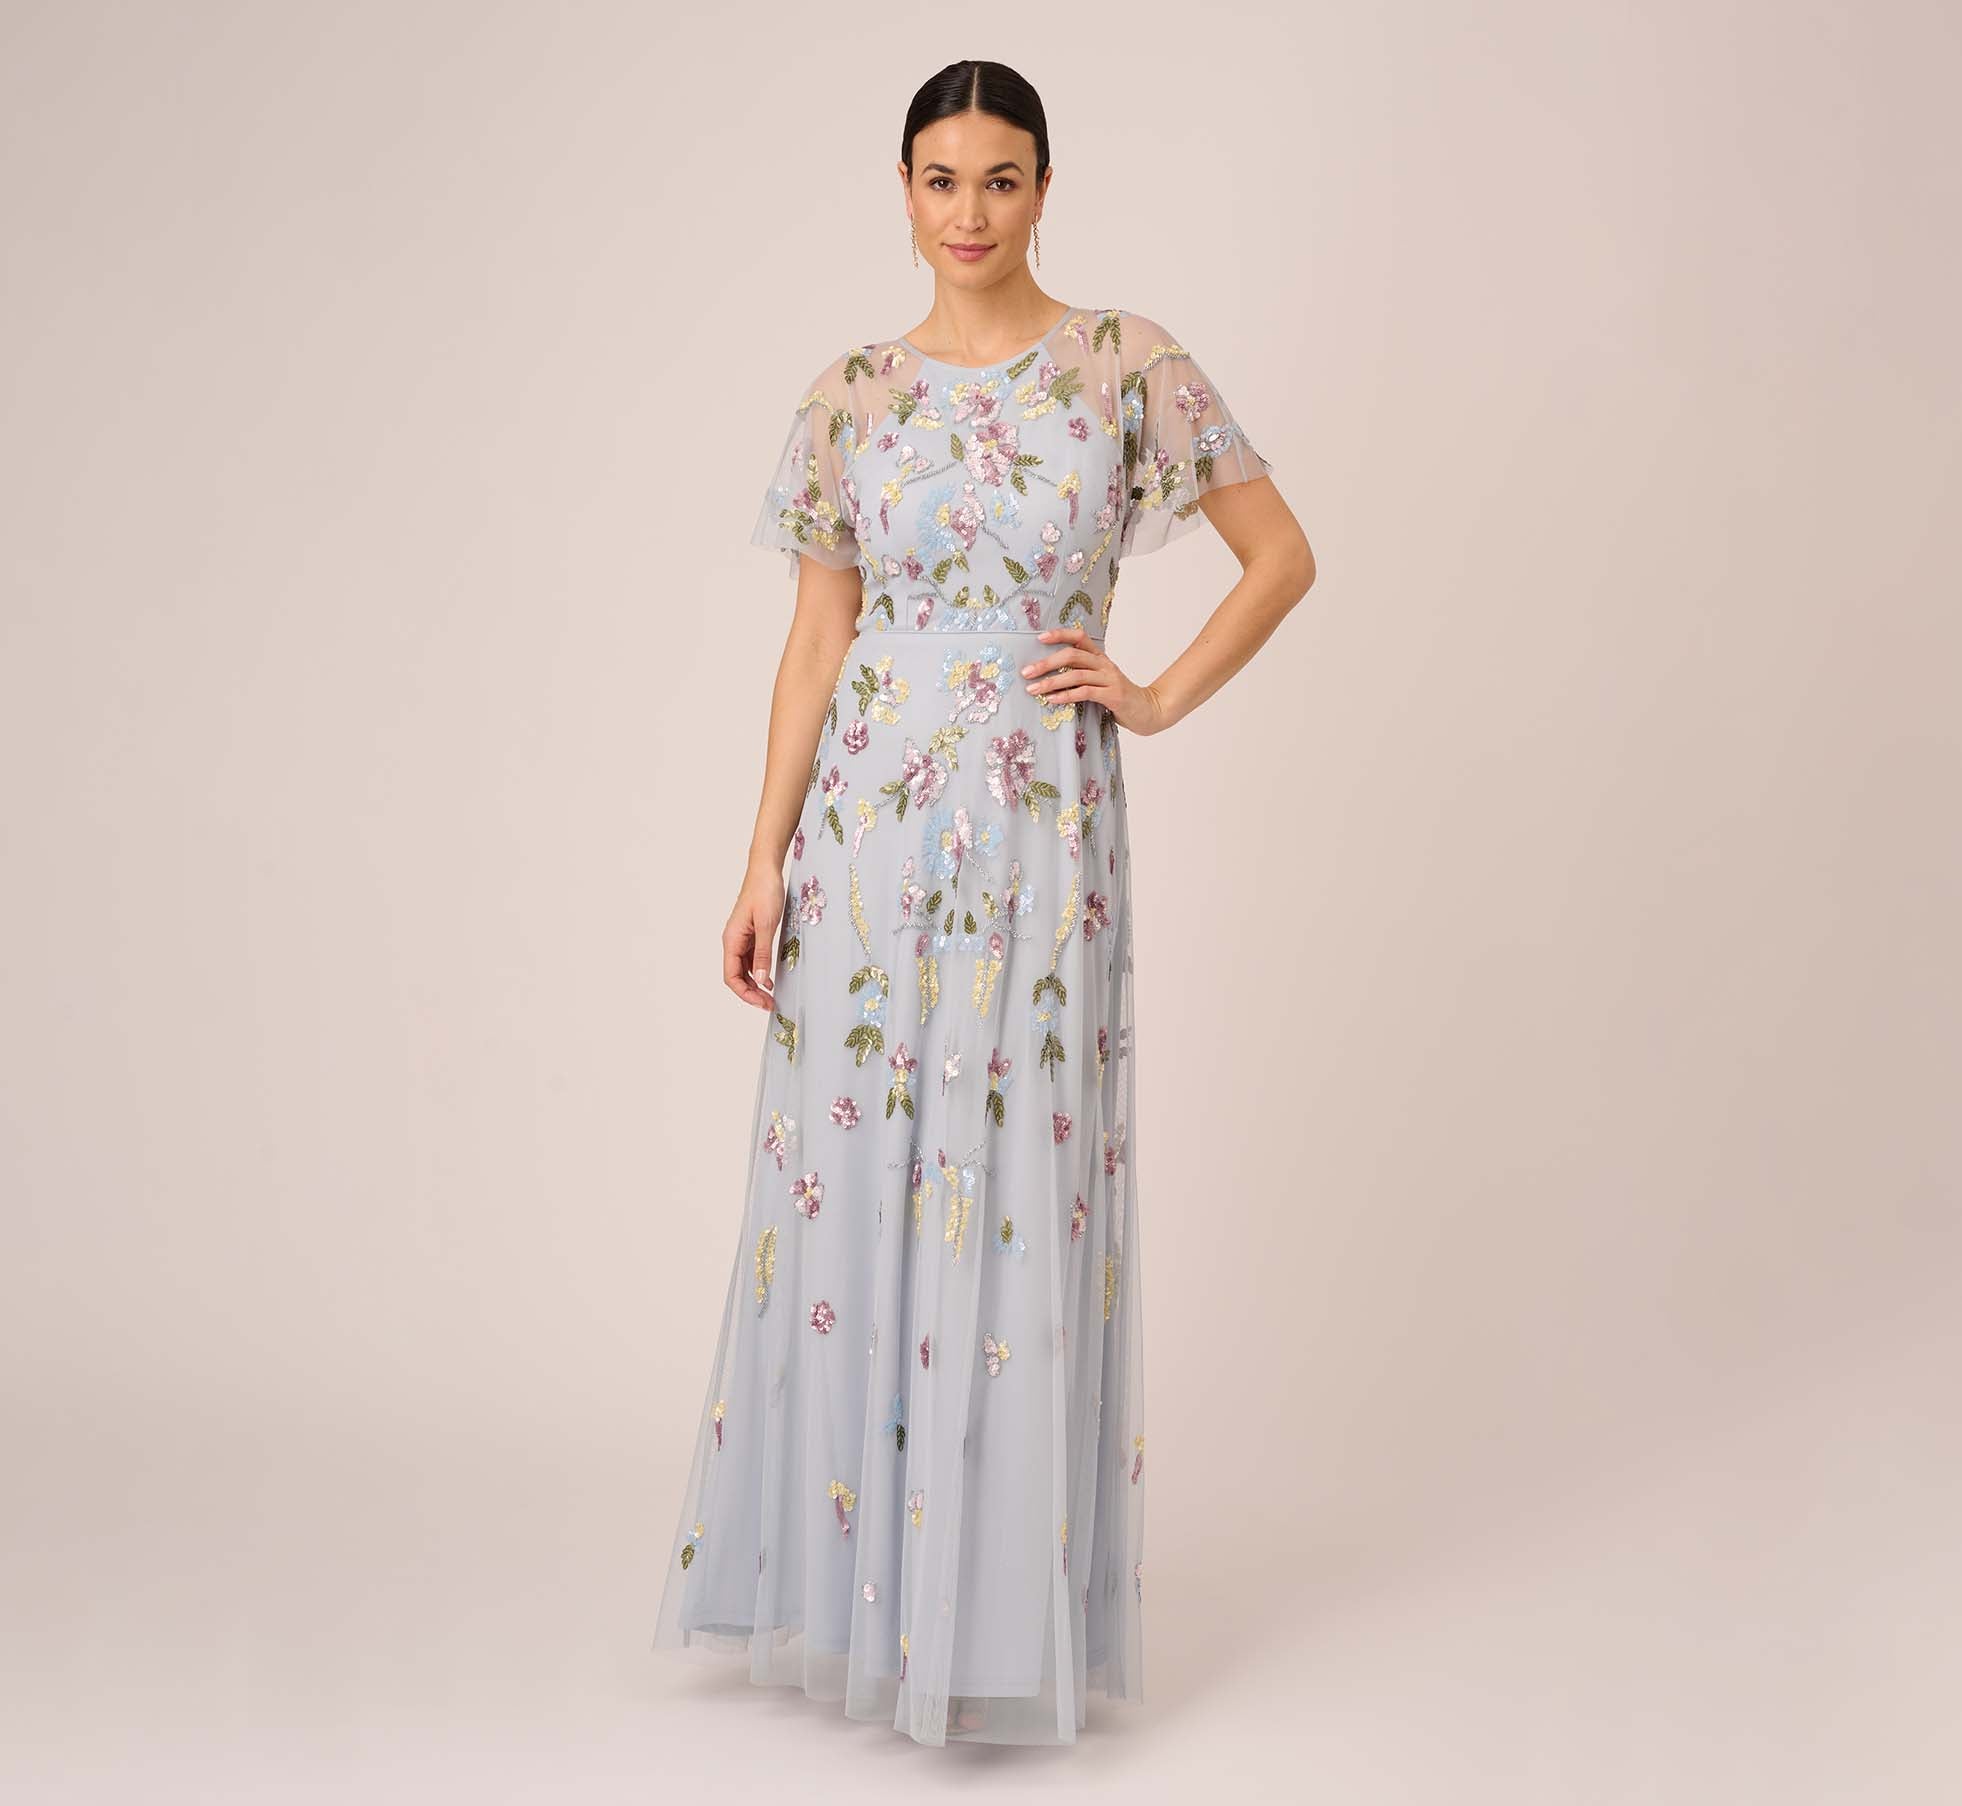 Adrianna Papell Floral A-Line Wedding Dress